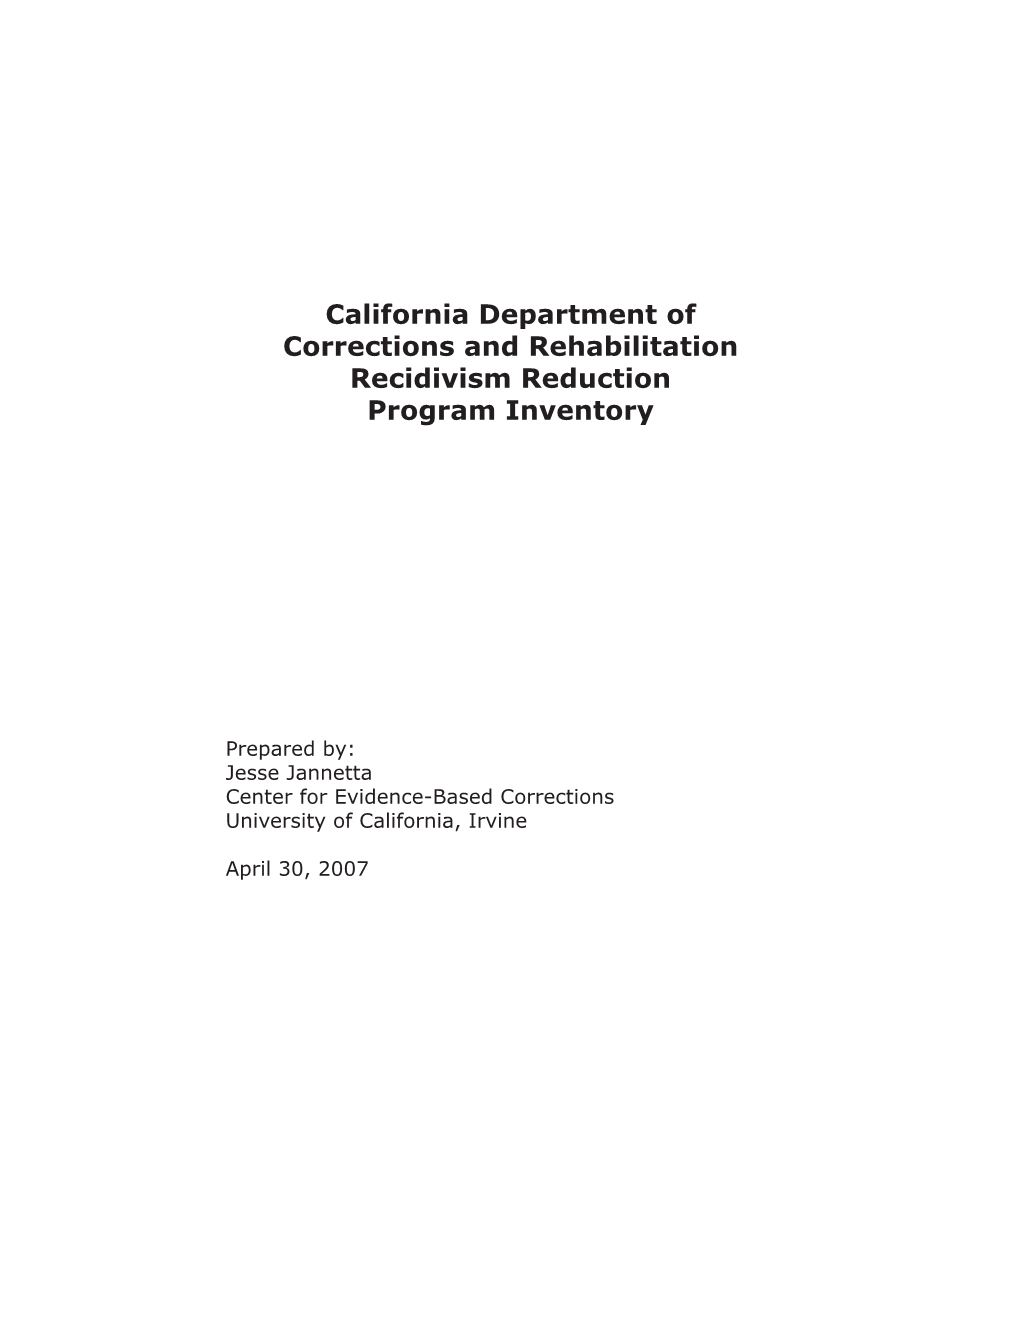 California Department of Corrections and Rehabilitation Recidivism Reduction Program Inventory